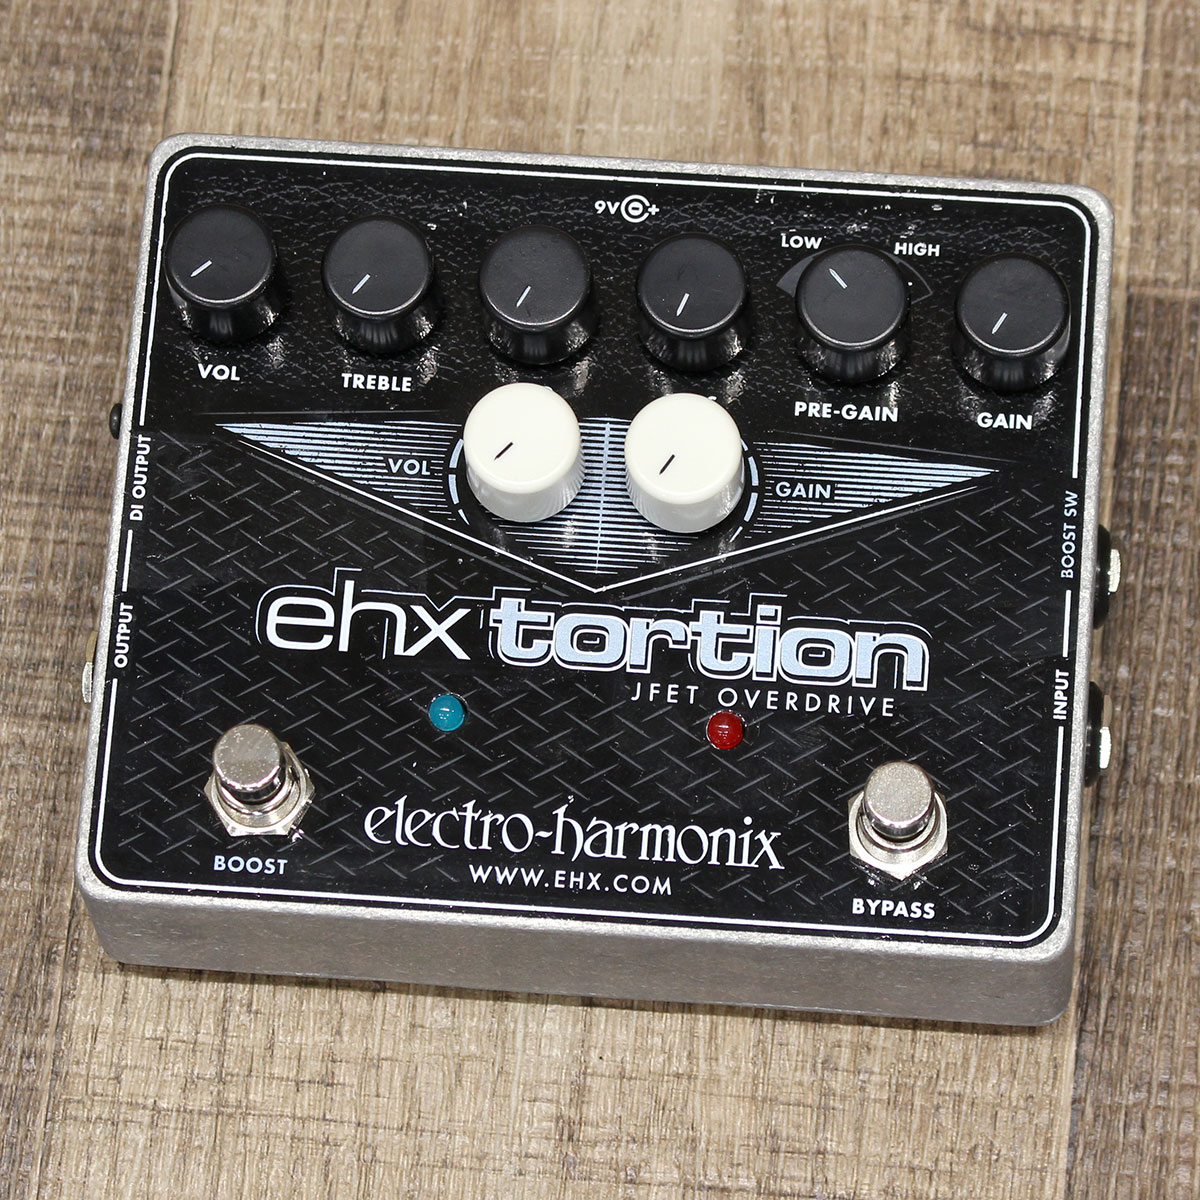 electro-harmonx ehx tortion - 1.jpg